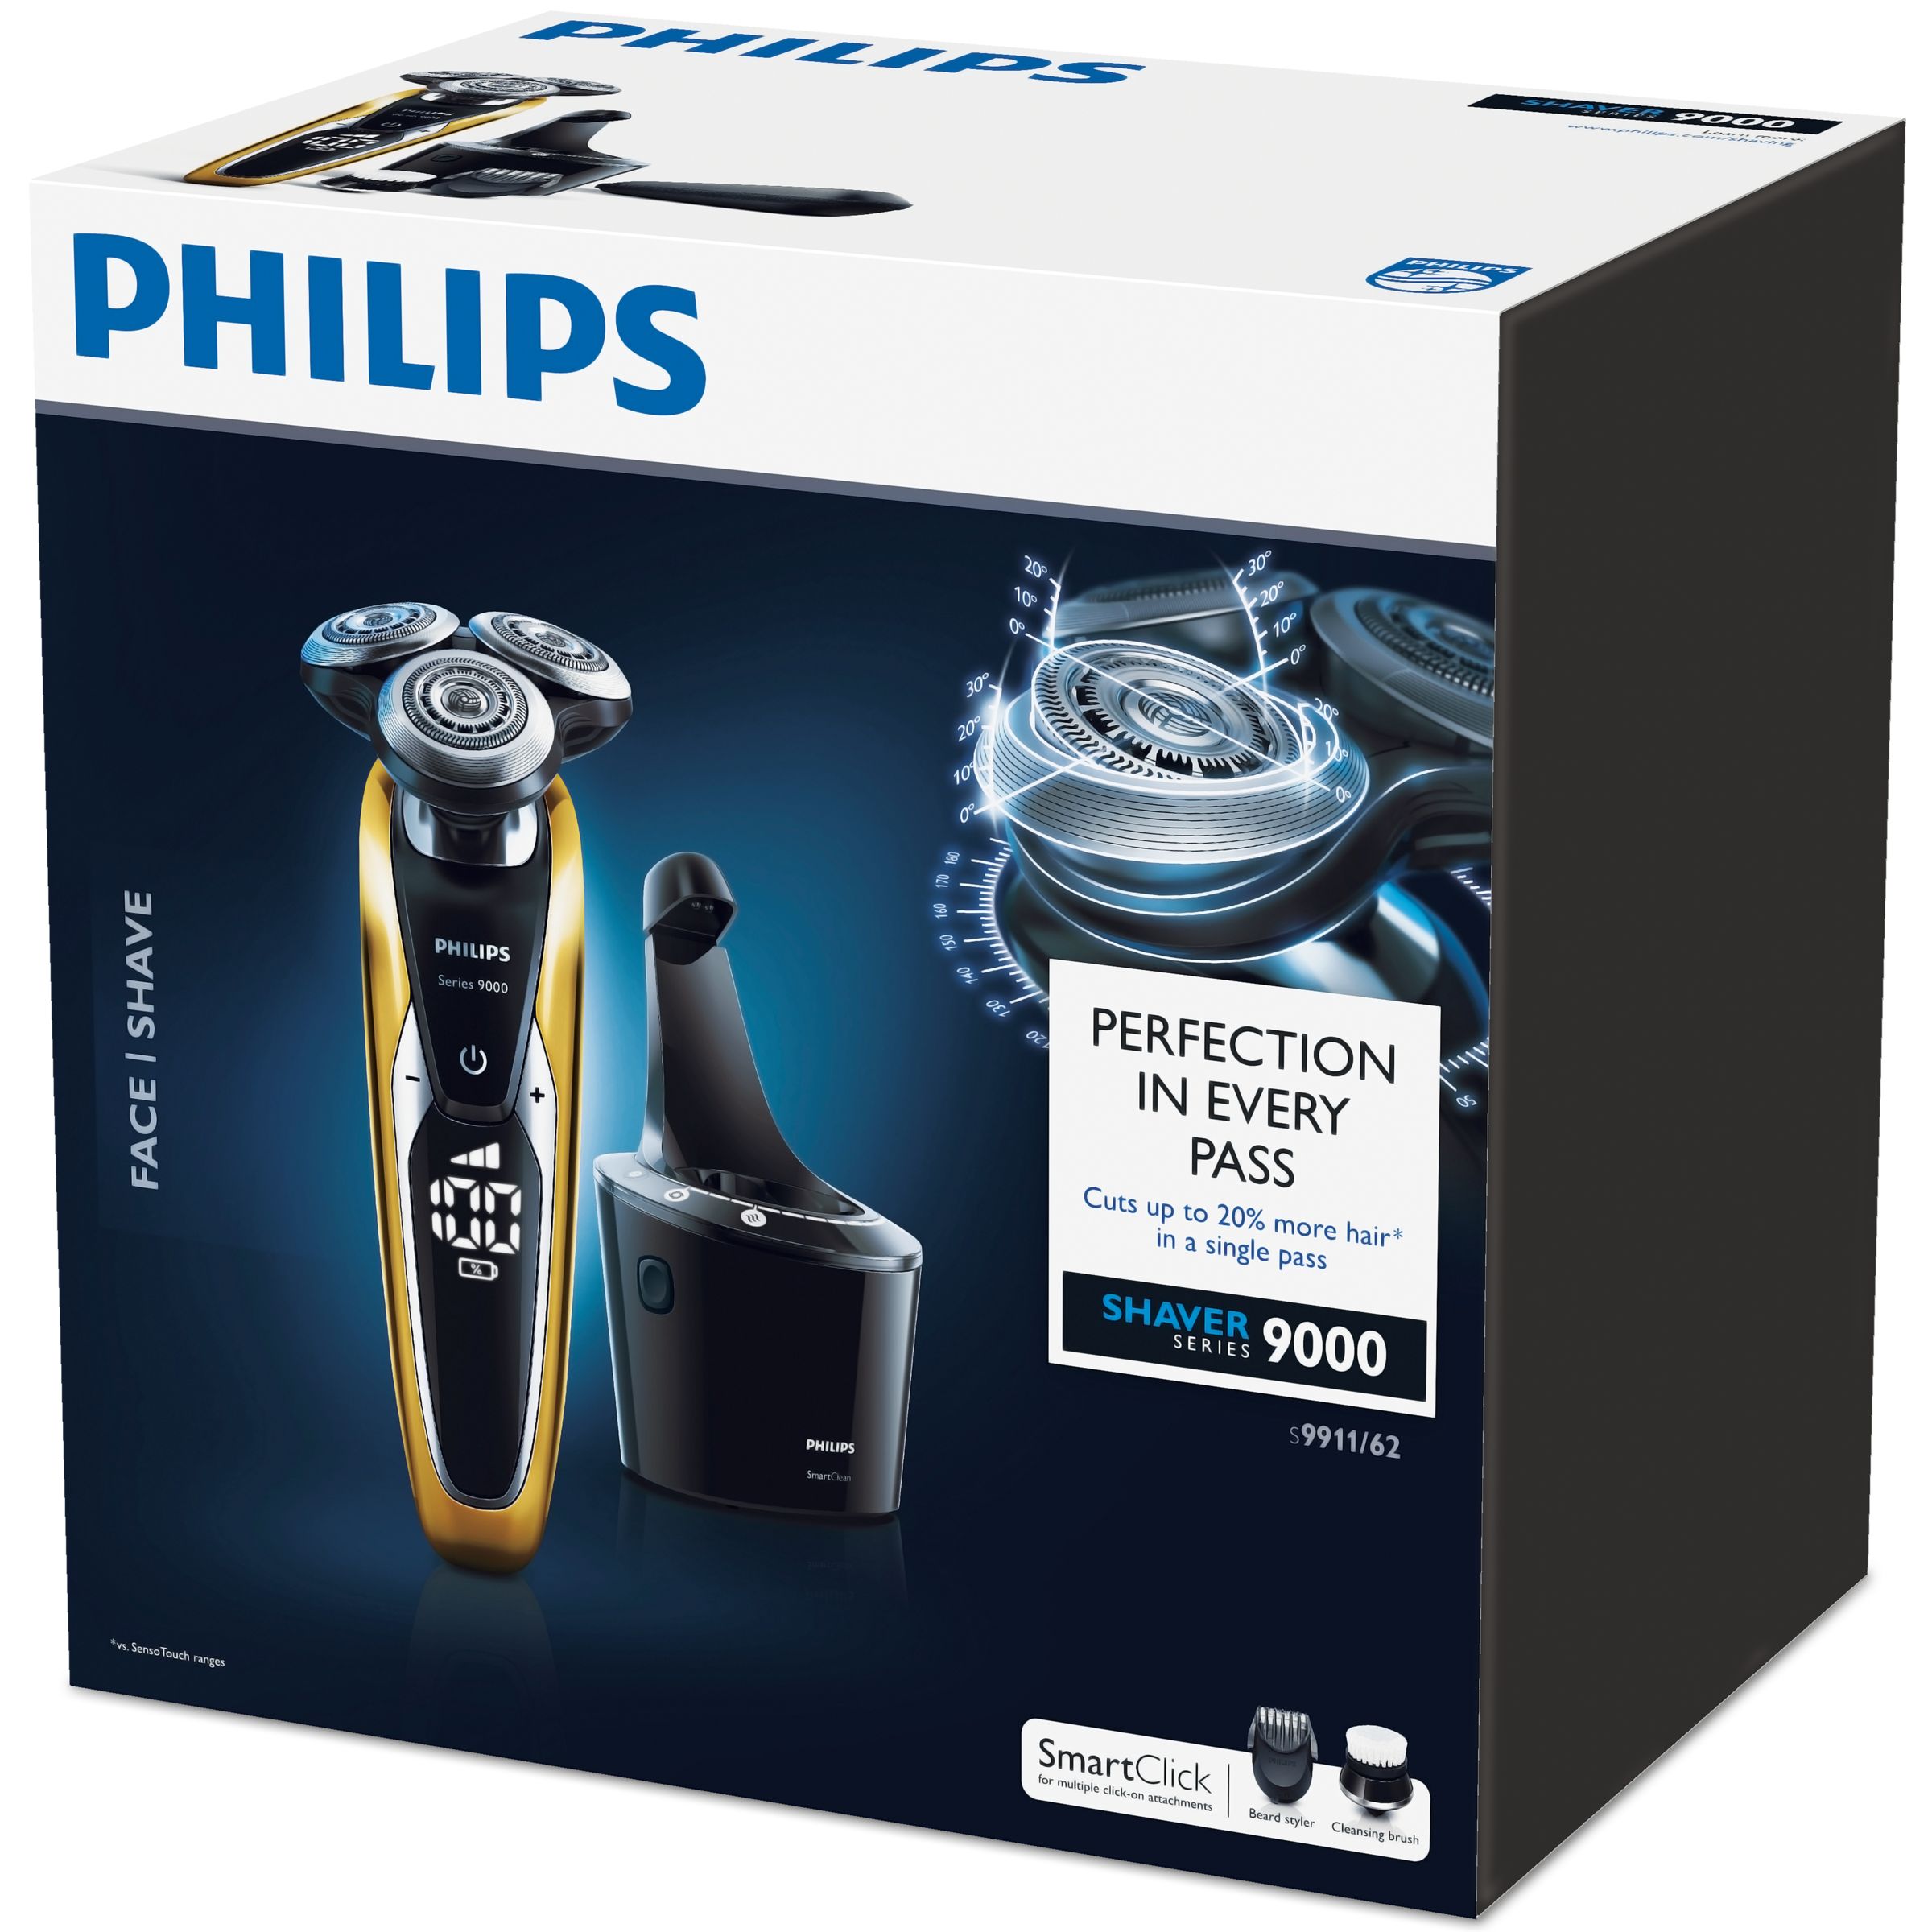 Филипс сериес. Philips Series 9000. Филипс Сериес 9000. Philips s9000. Бритва Филипс 9000 комплектация.